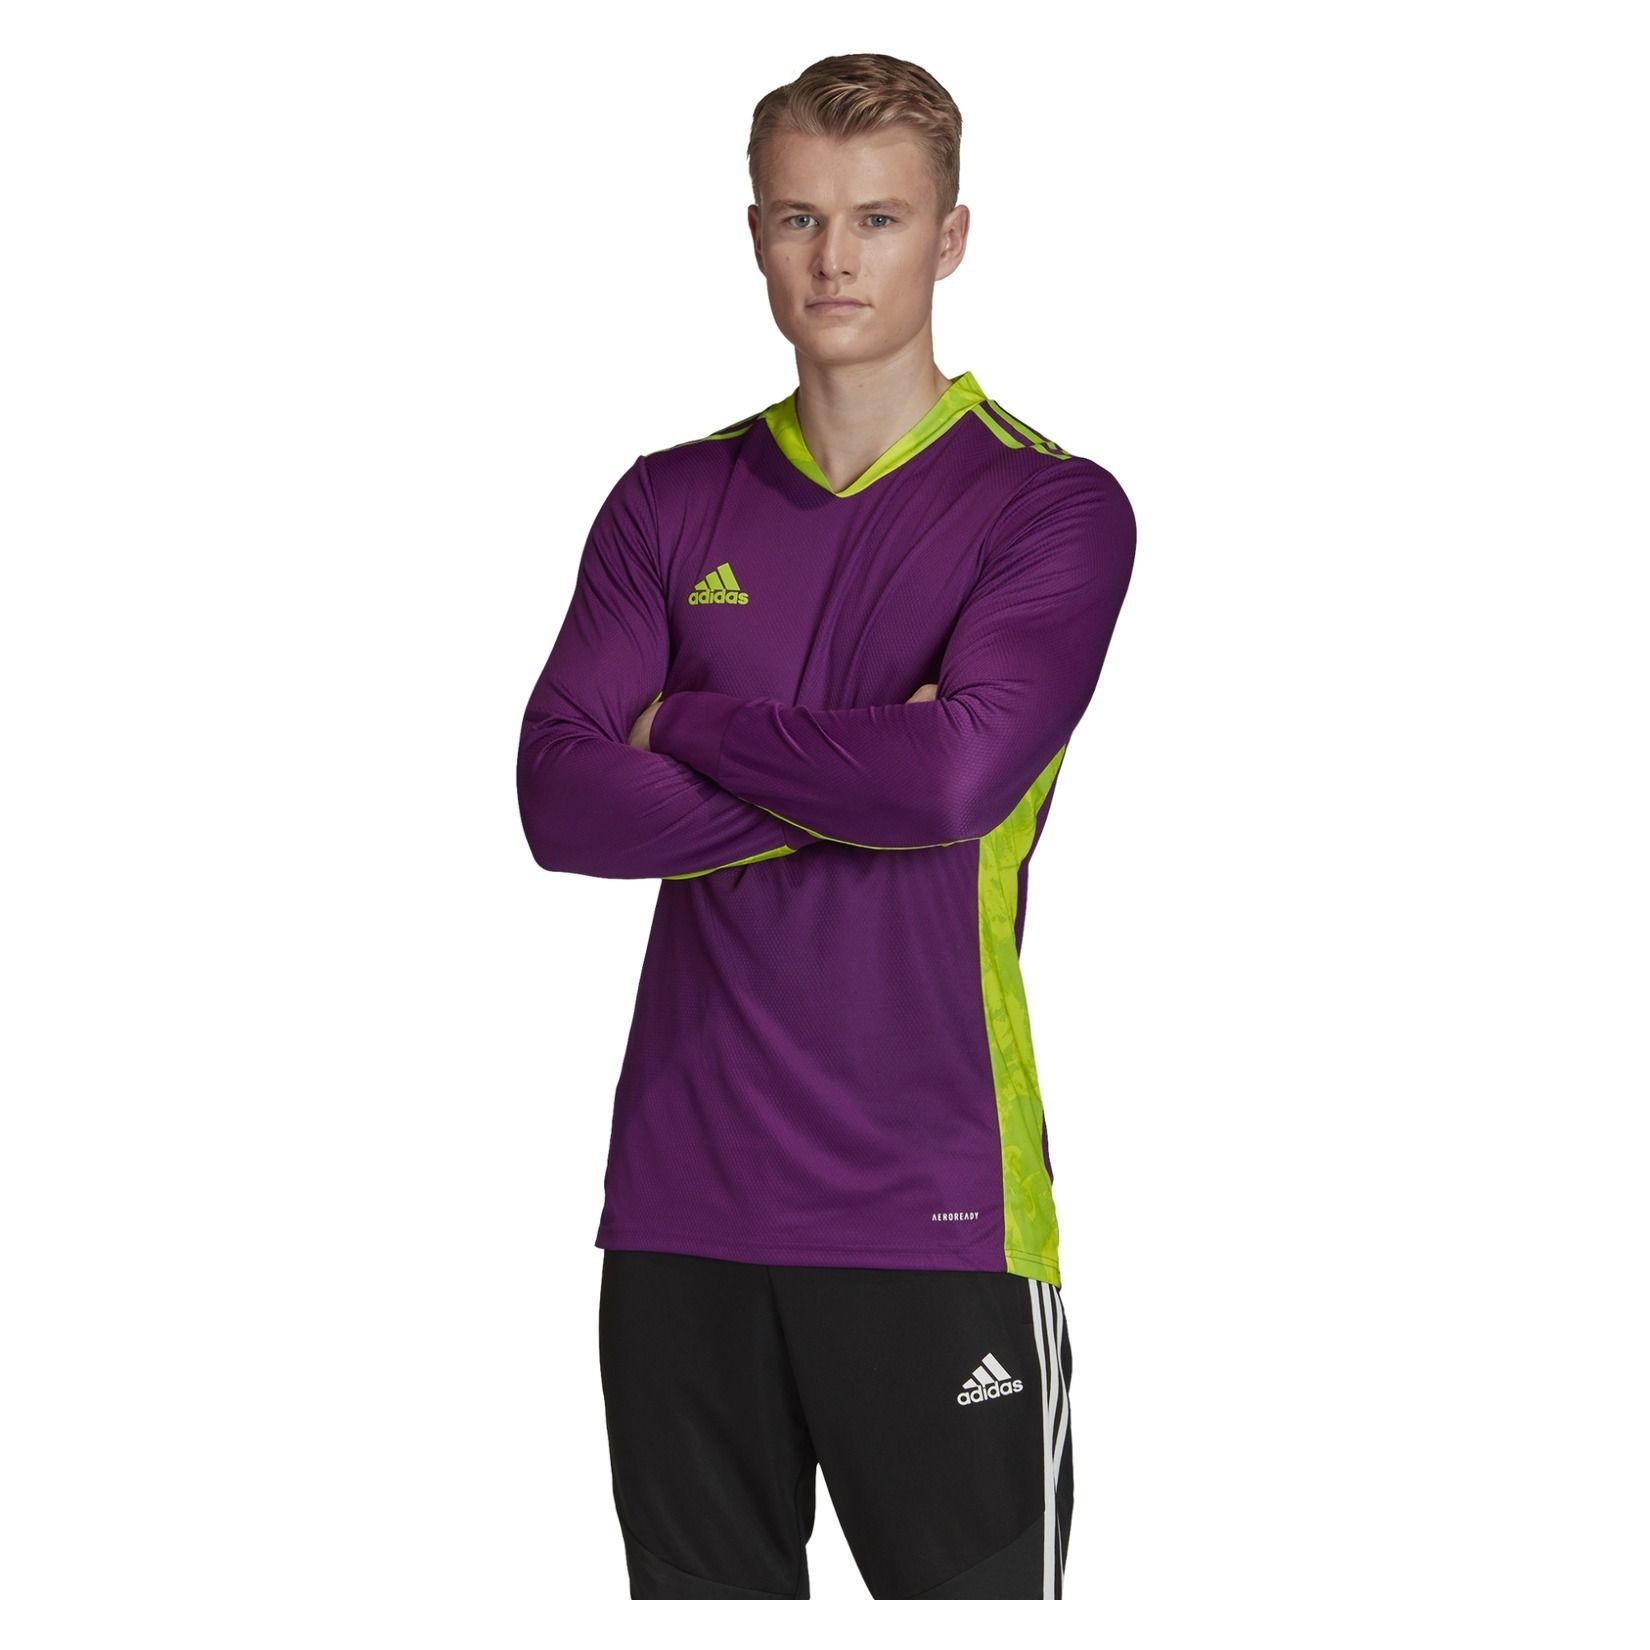 adidas Adipro 20 Goalkeeper Jersey - Kitlocker.com